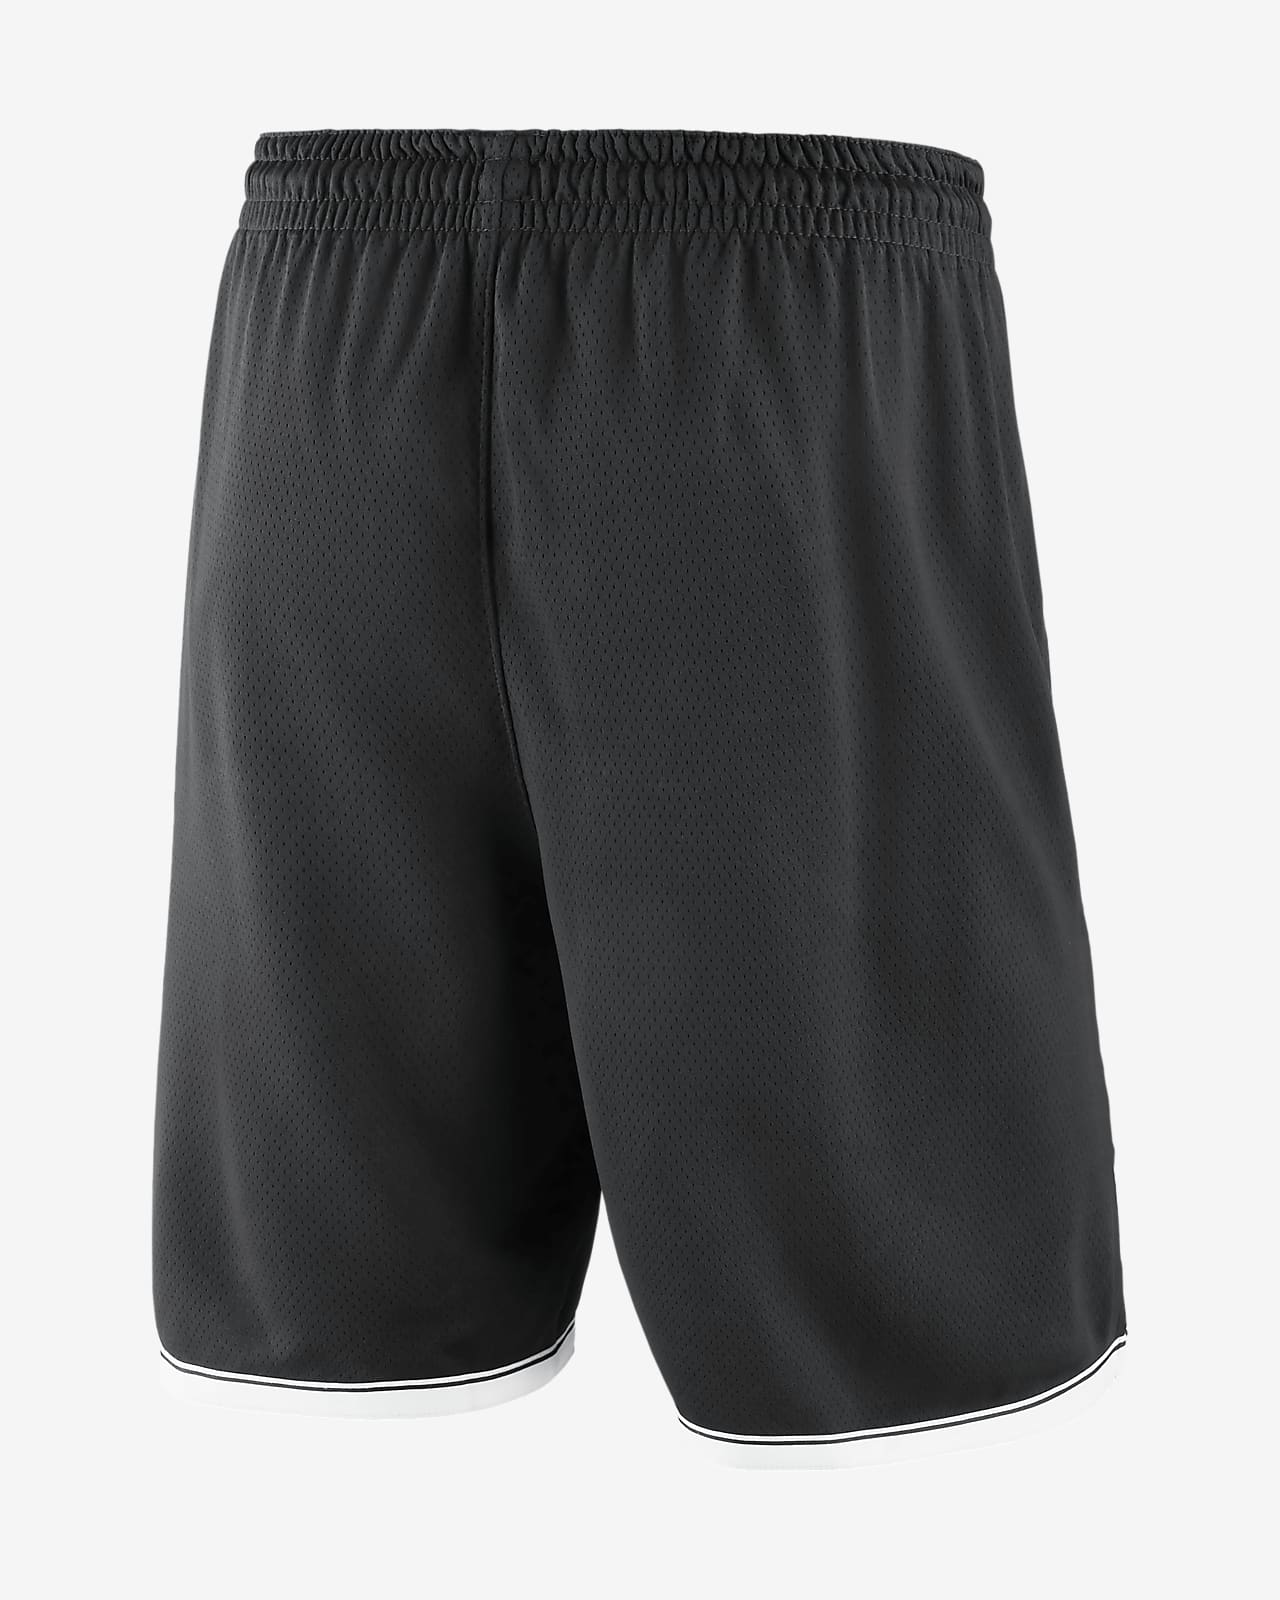 Brooklyn Nets Icon Edition Men's Nike NBA Swingman Shorts.